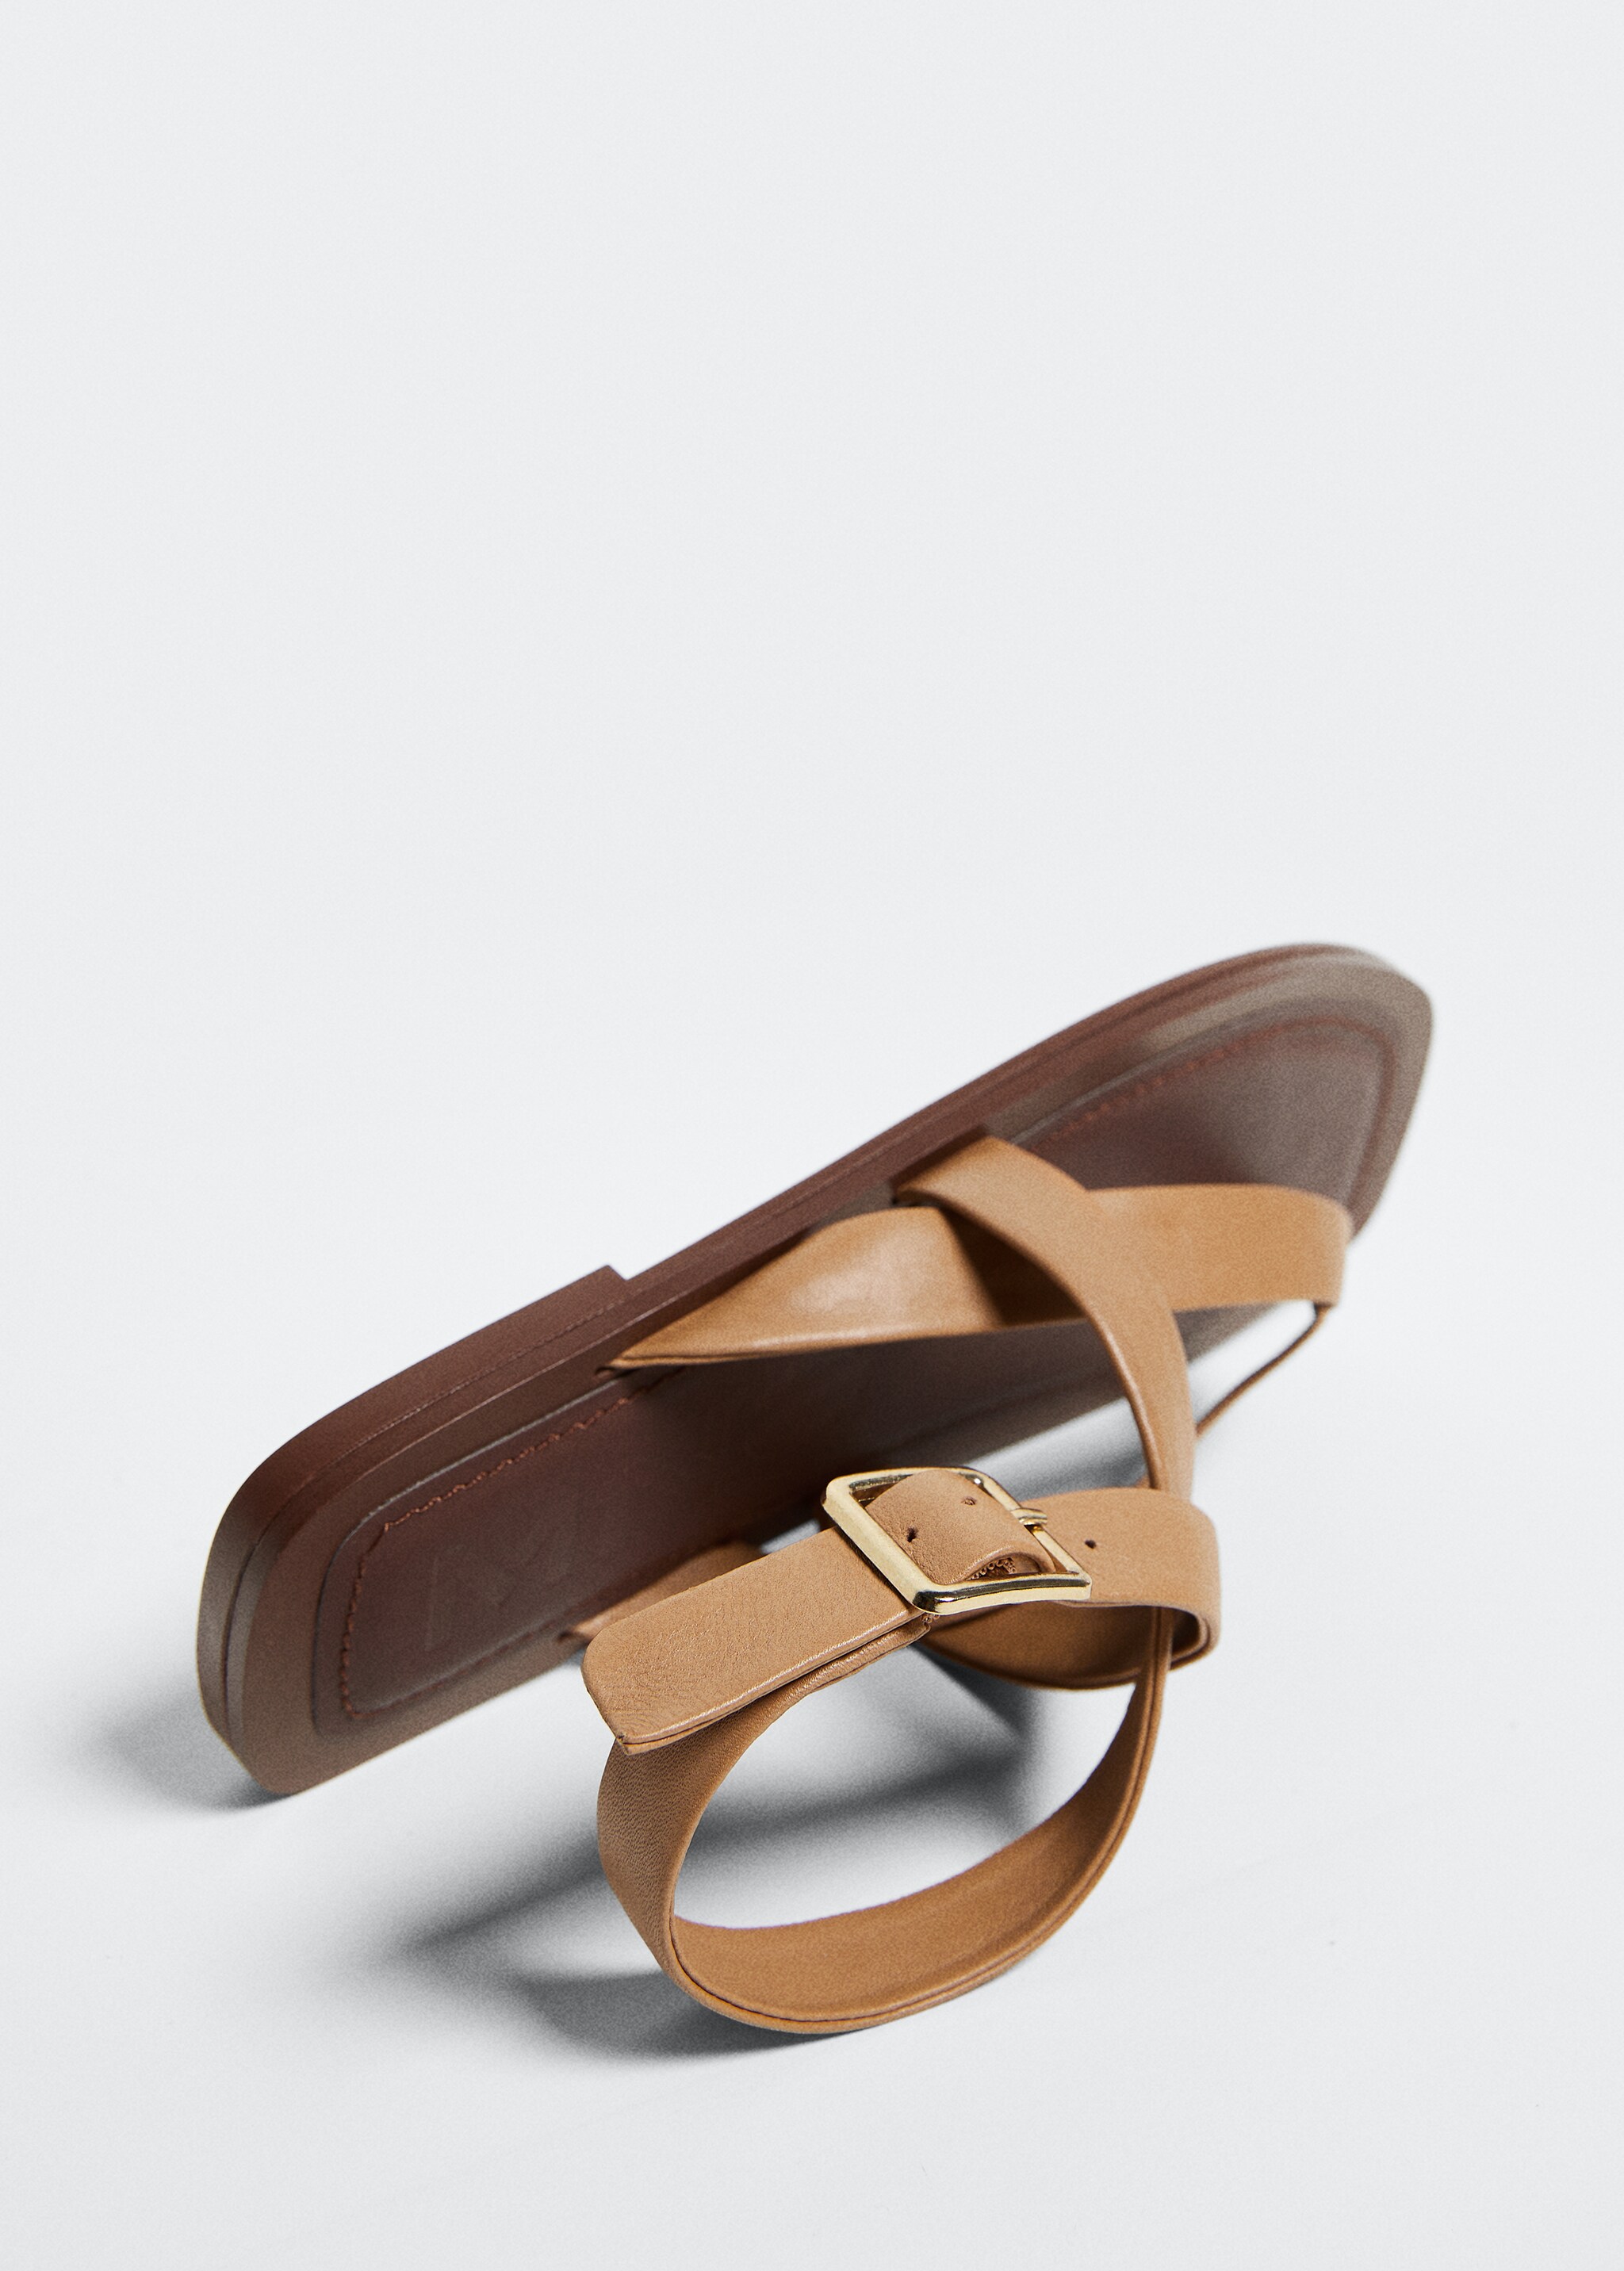 Leather straps sandals - Plan mediu